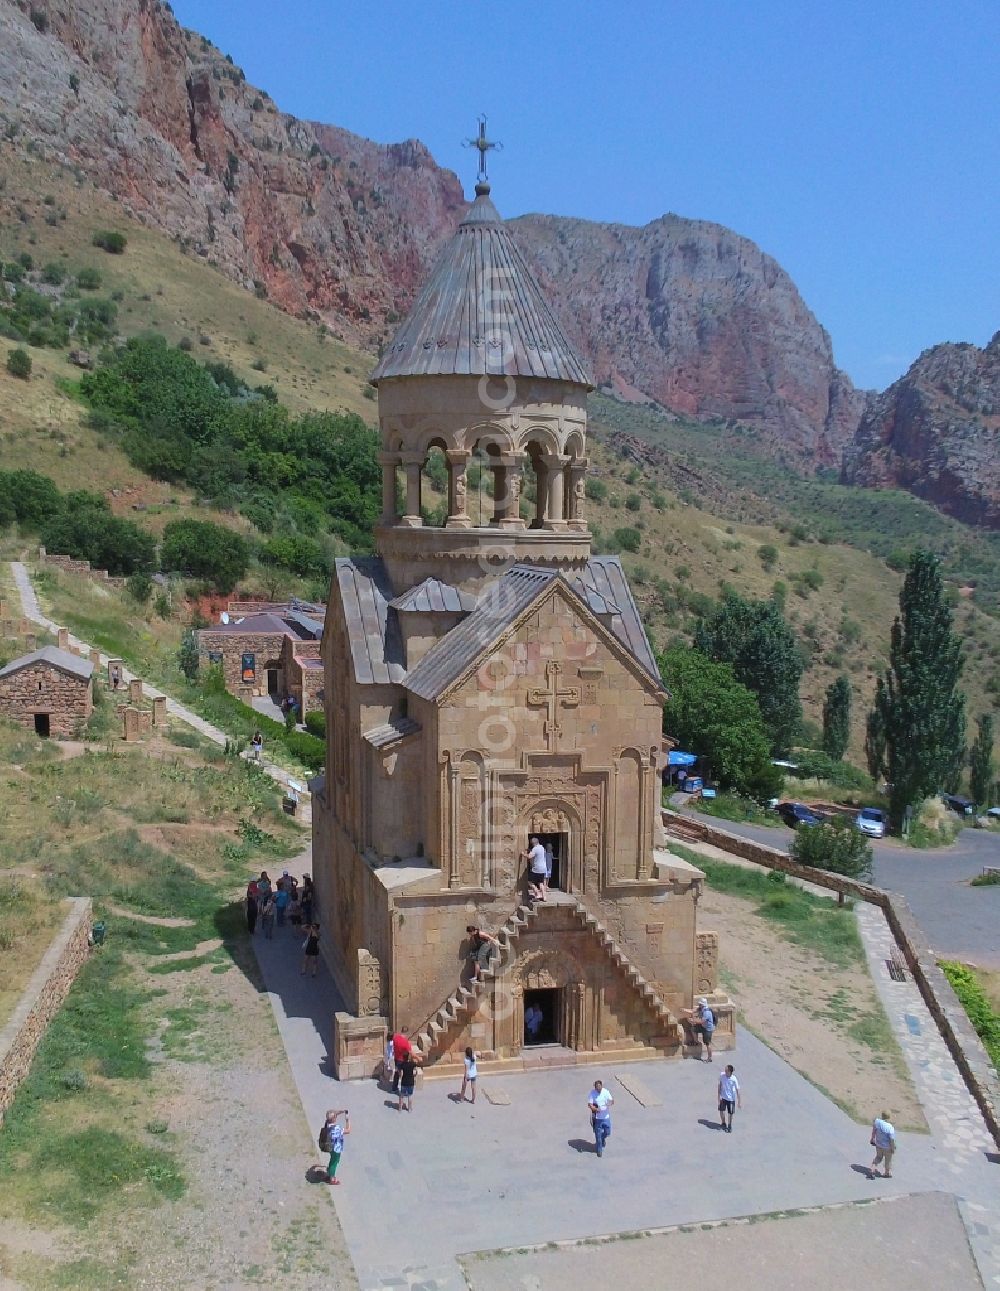 Vayots Dzor from the bird's eye view: View of the monastery Noravankh in the Vayots Dzor Province, Armenia